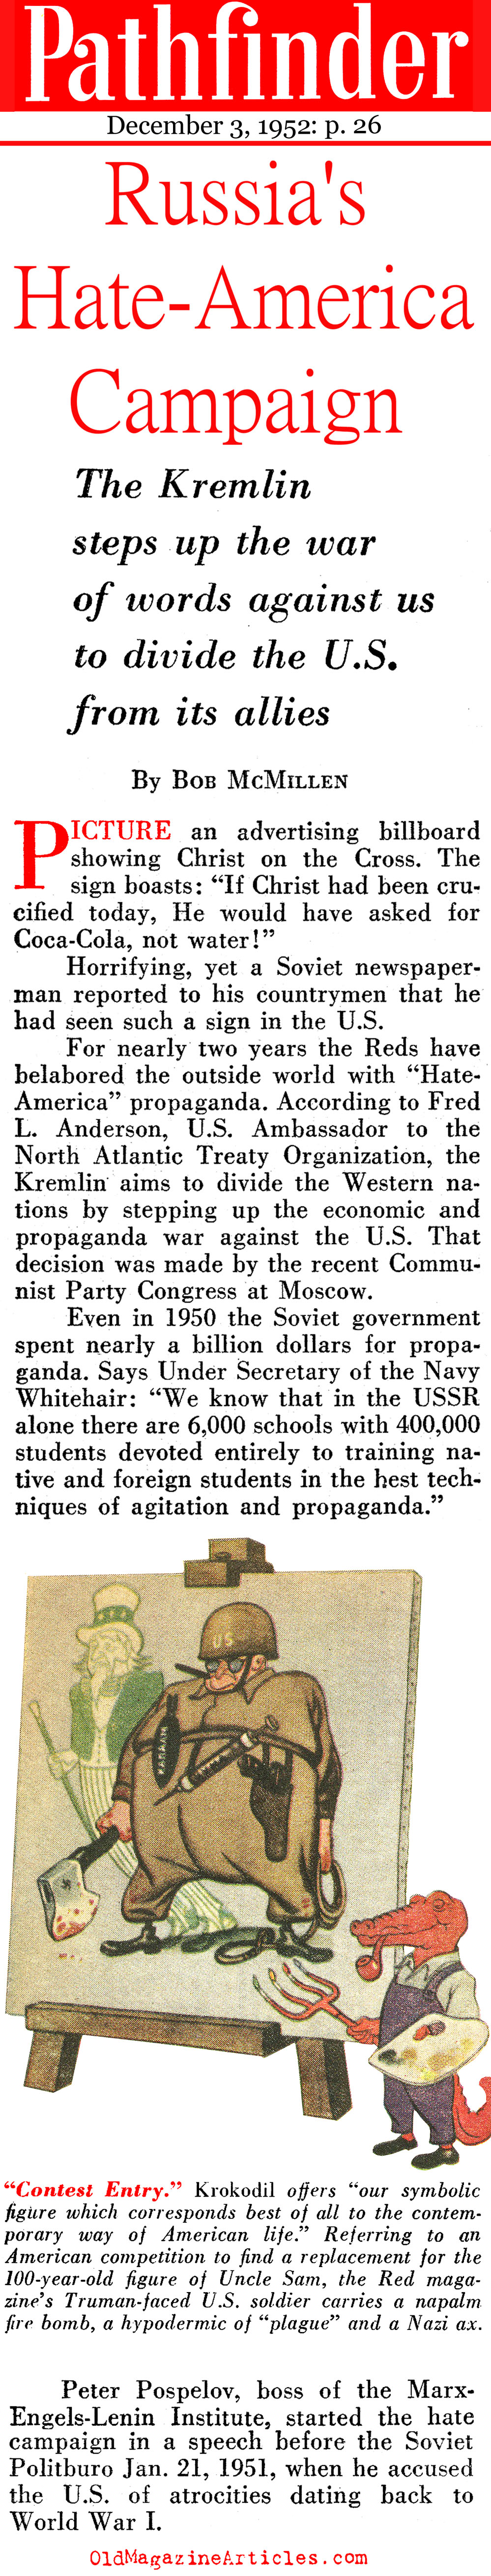 Stalin's 'Hate-America' Campaign (Pathfinder Magazine, 1952)